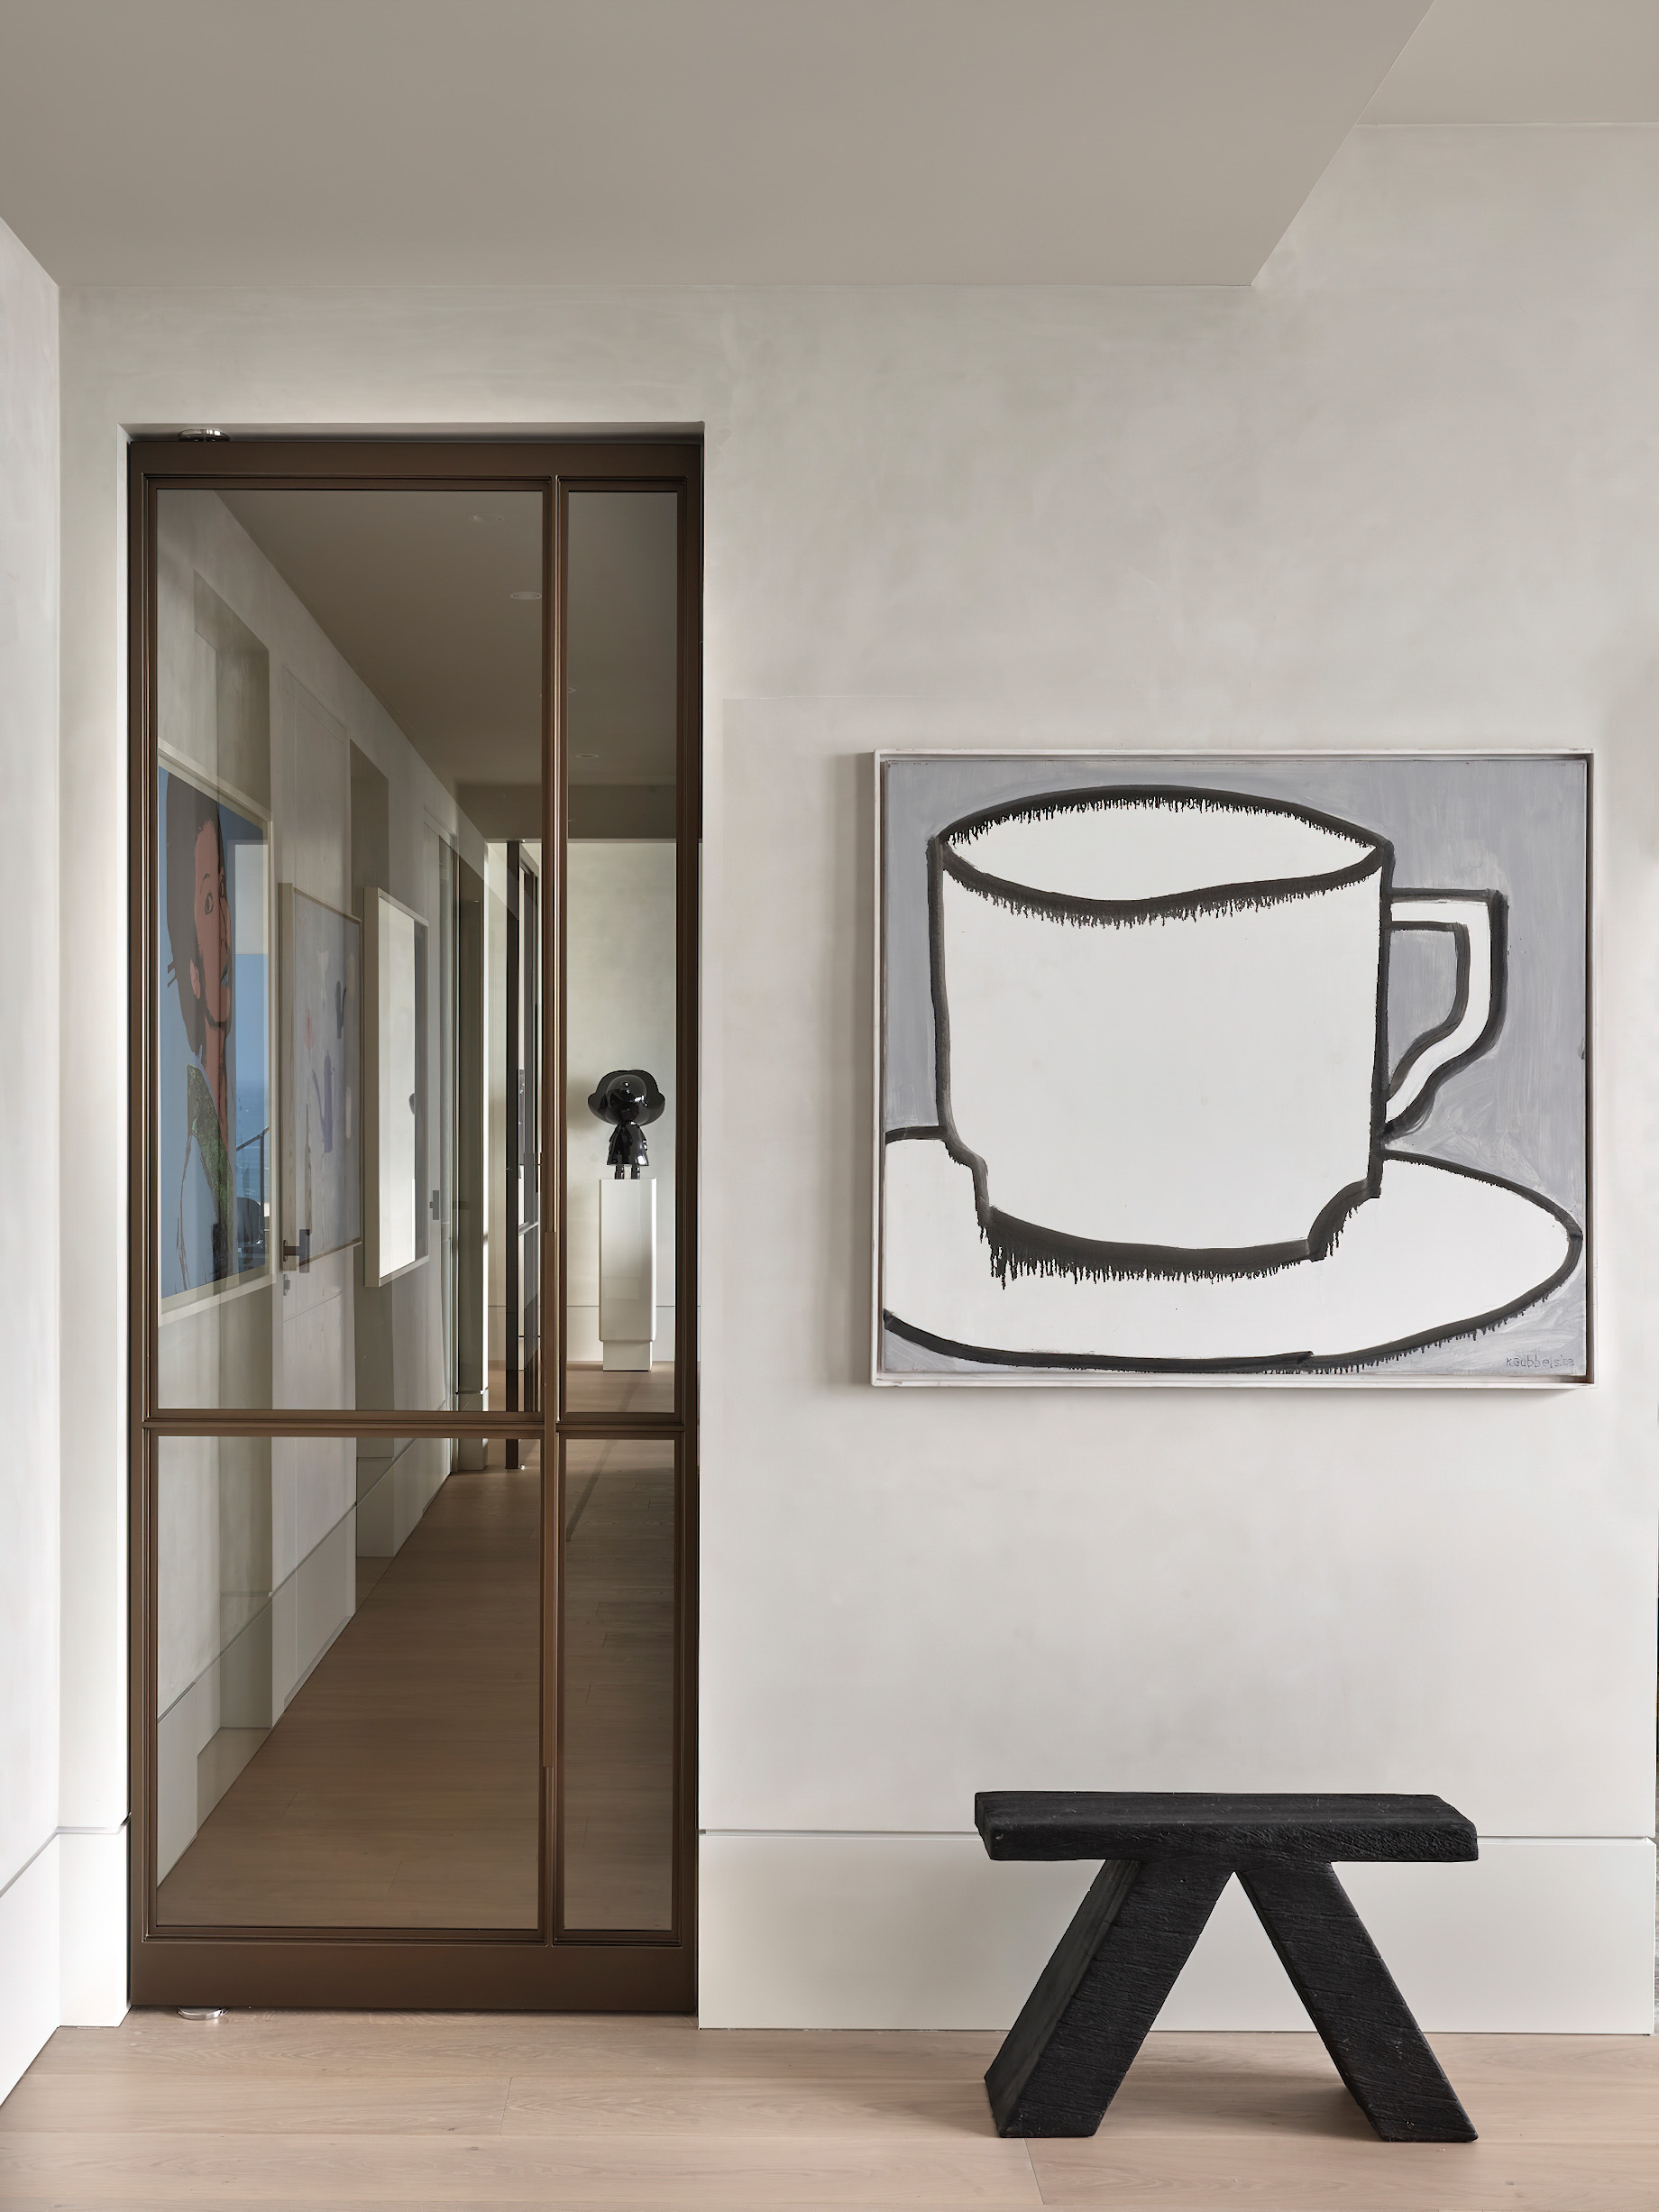 High Luxury Apartment Interior Amsterdam, Netherlands – Studio Piet Boon